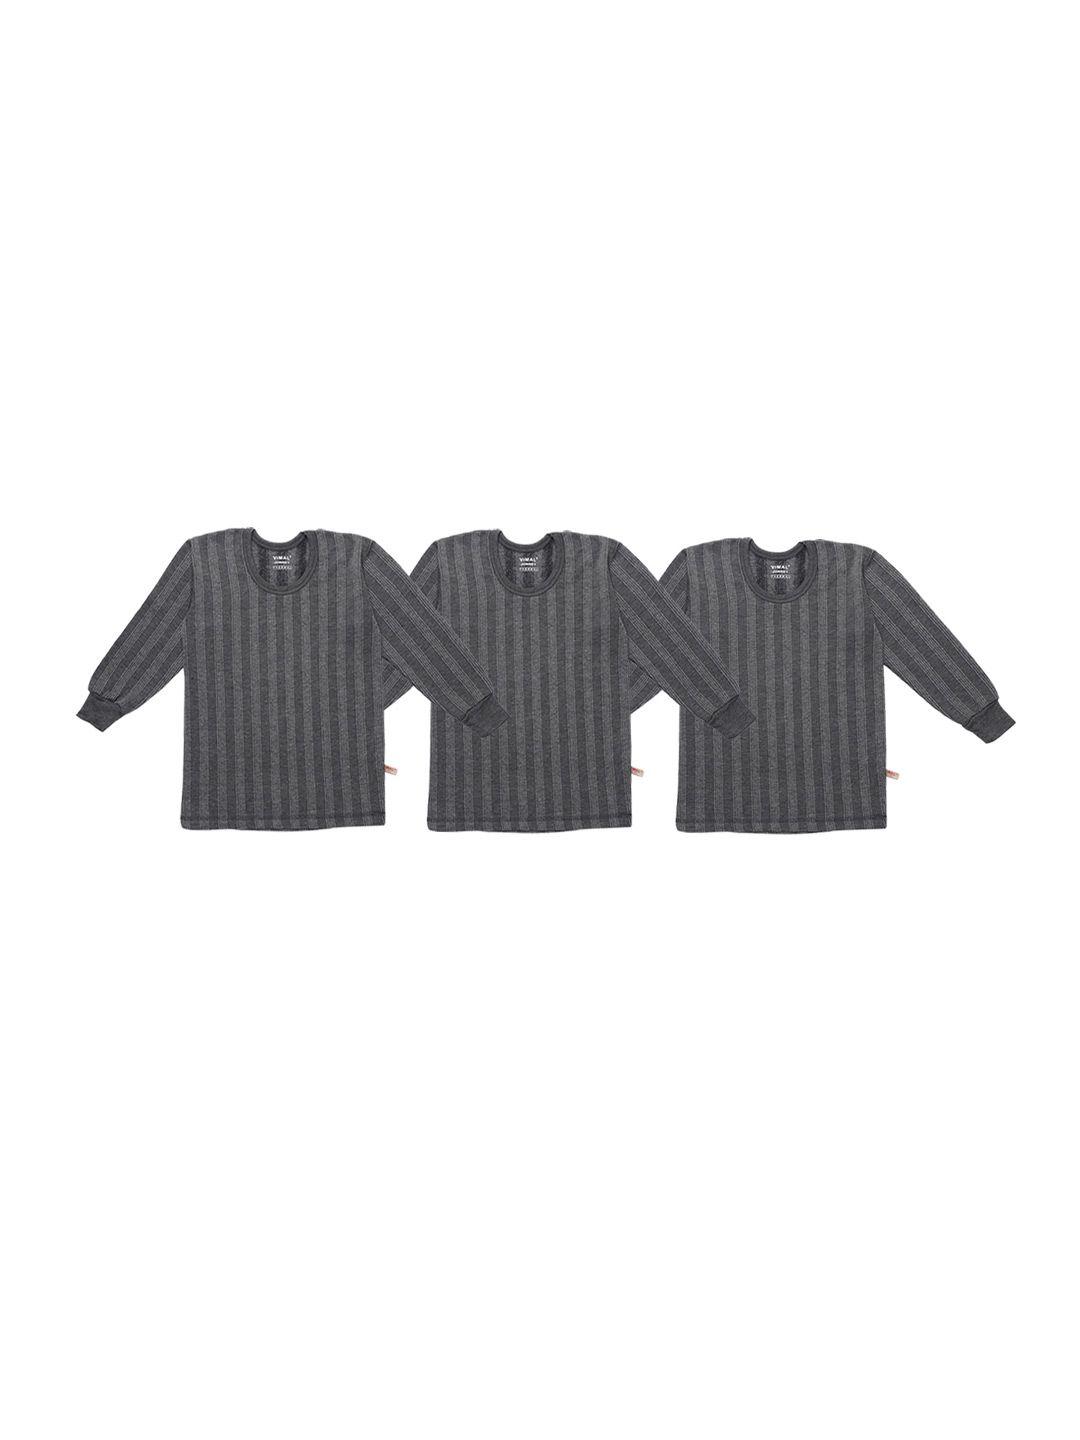 vimal jonney kids pack of 3 grey striped thermal tops